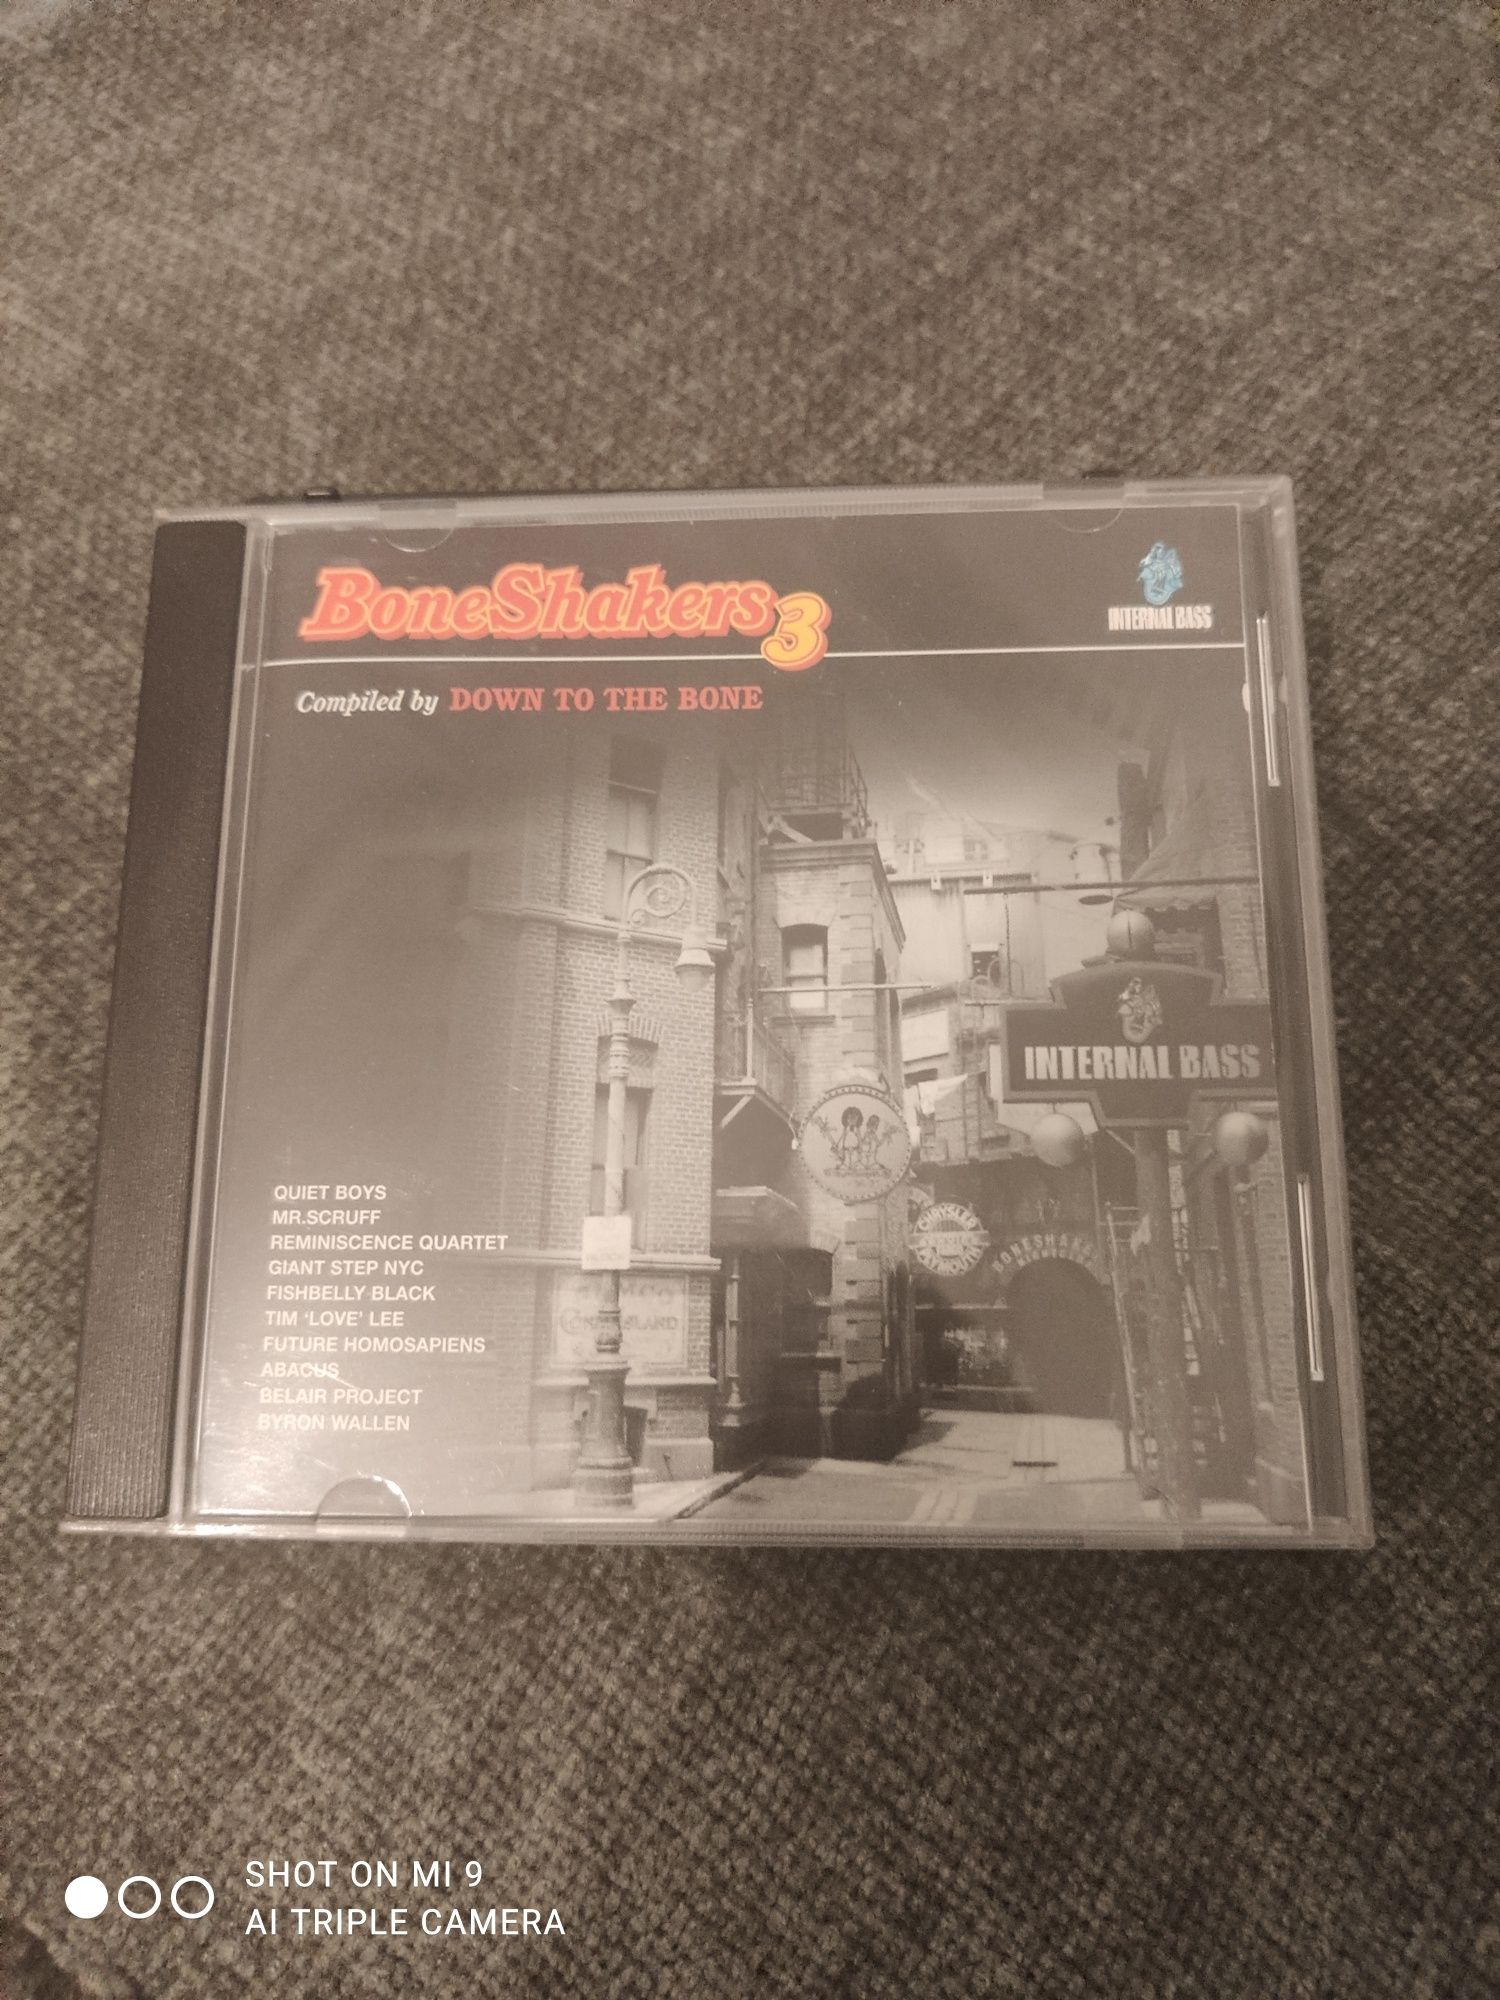 (CD) Boneshakers 3 - compilado por Down to the Bone